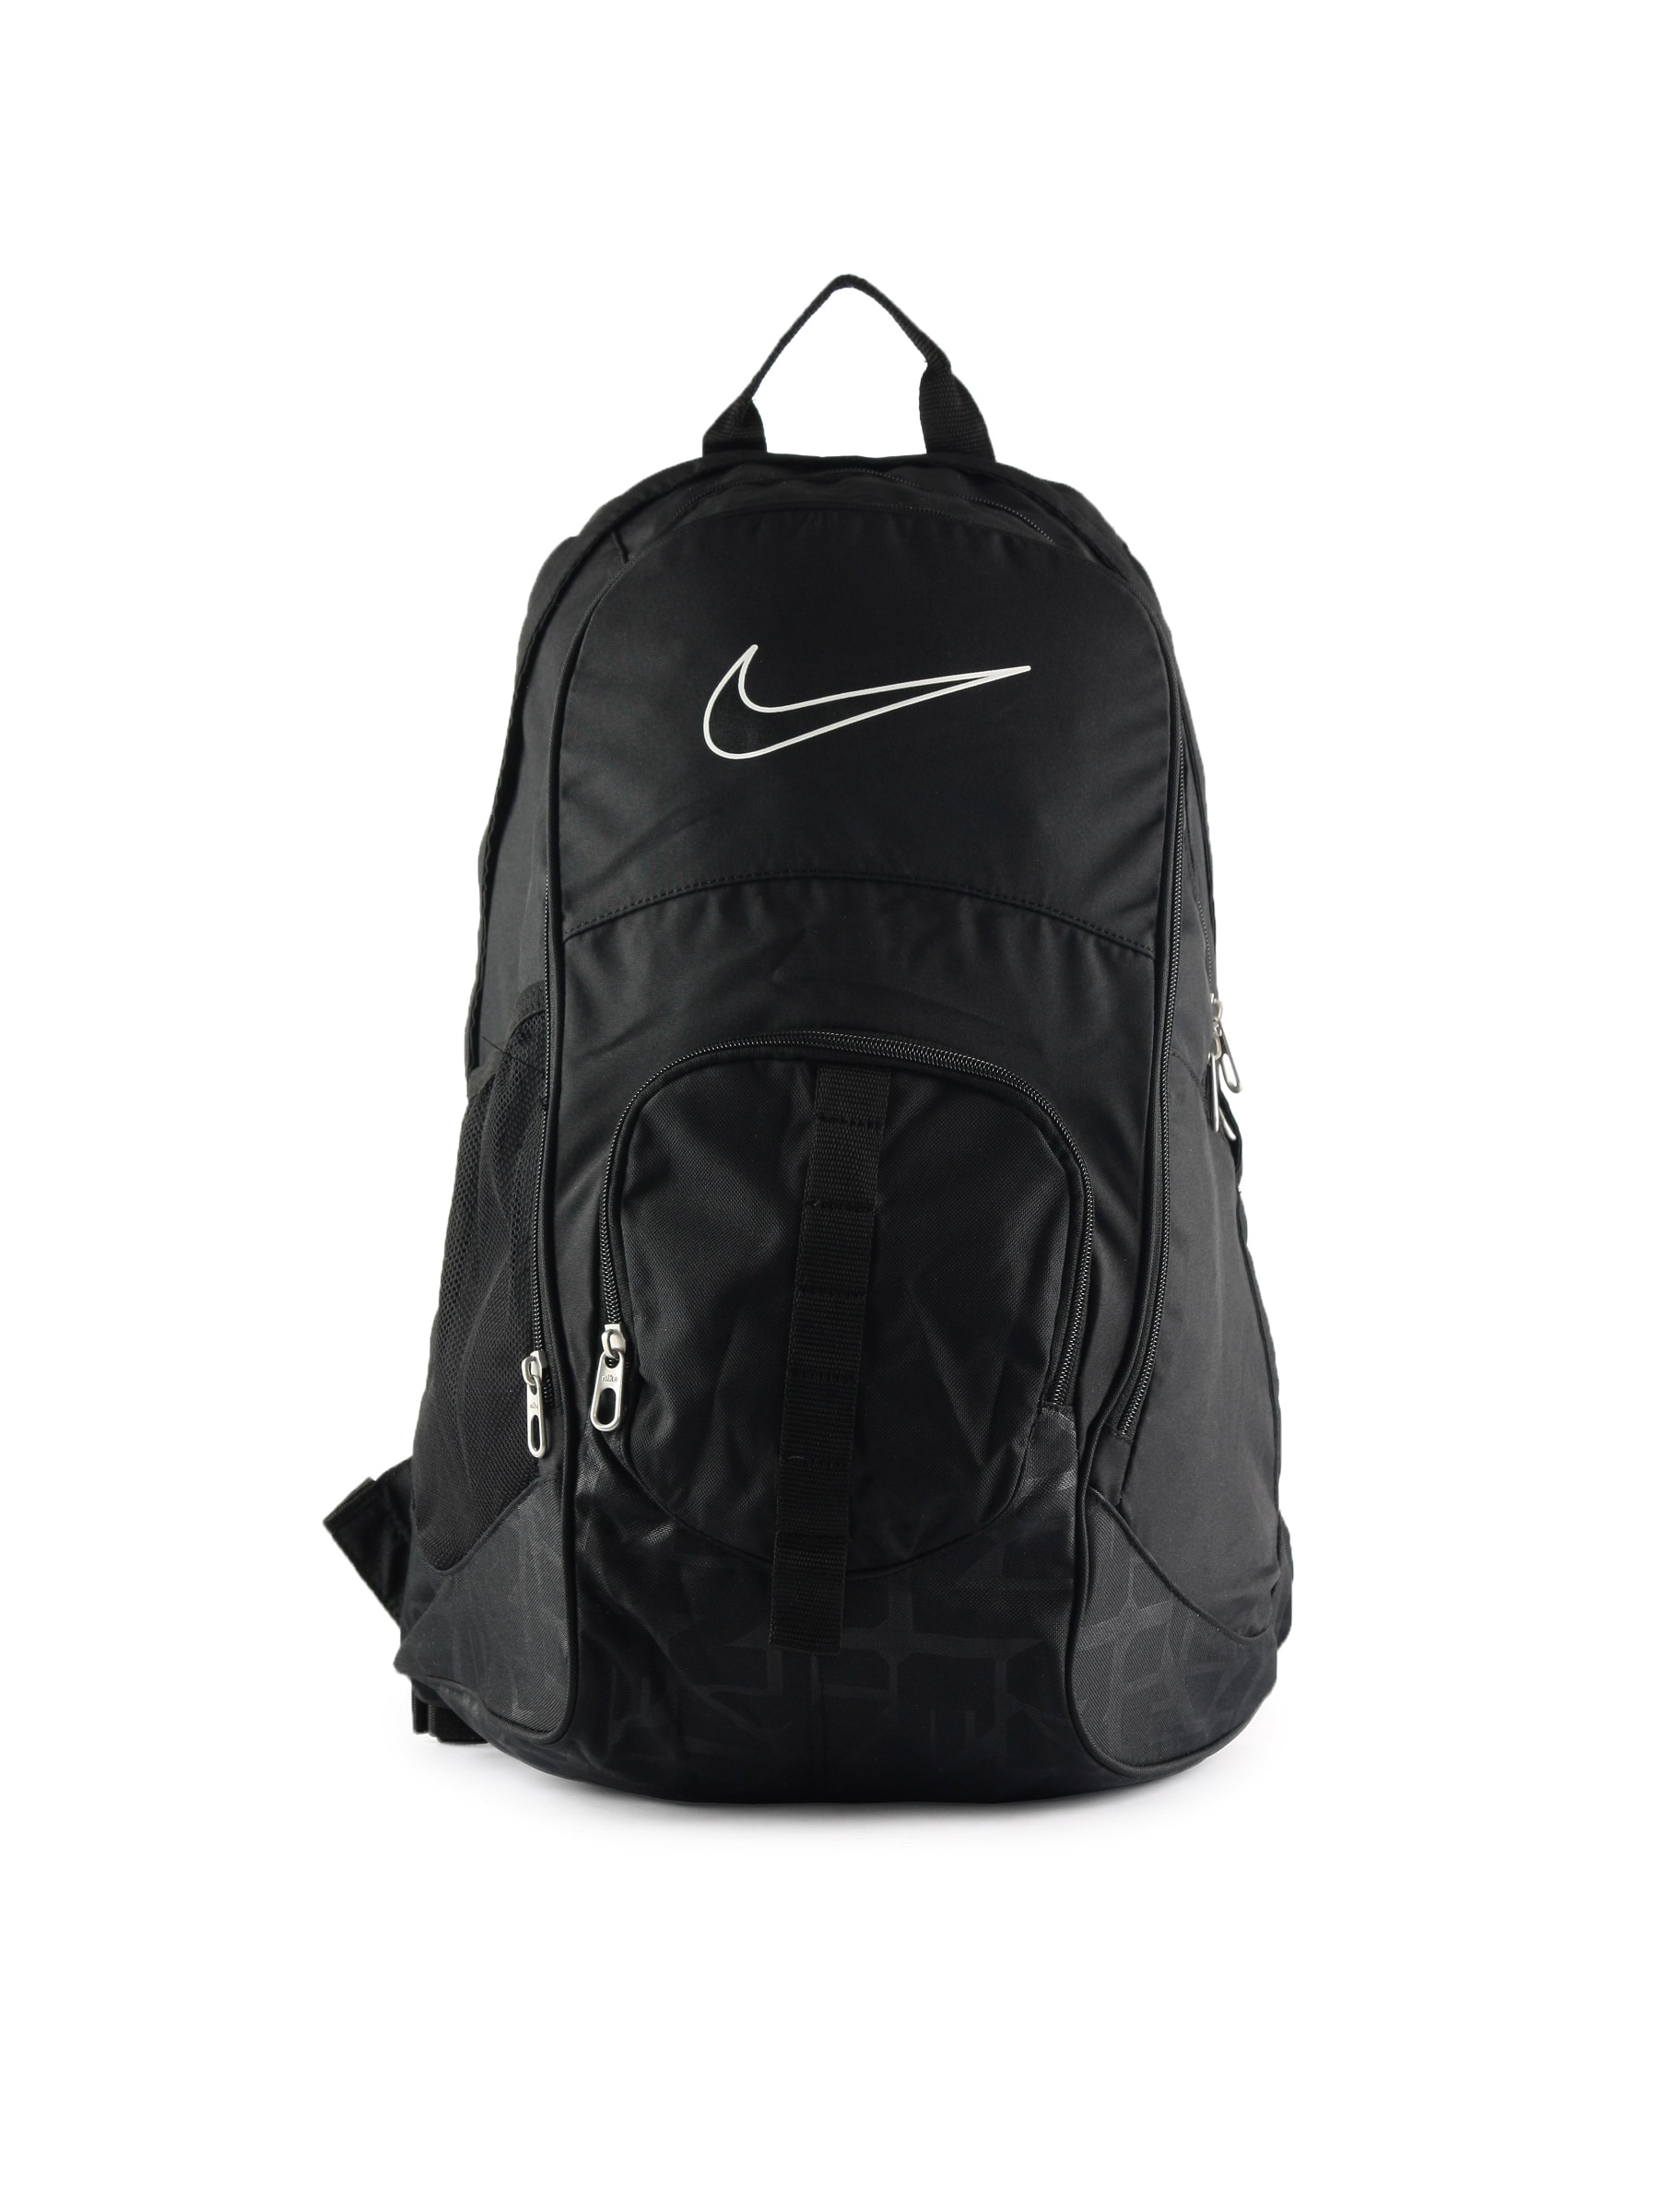 Nike Unisex Casual Black Backpack